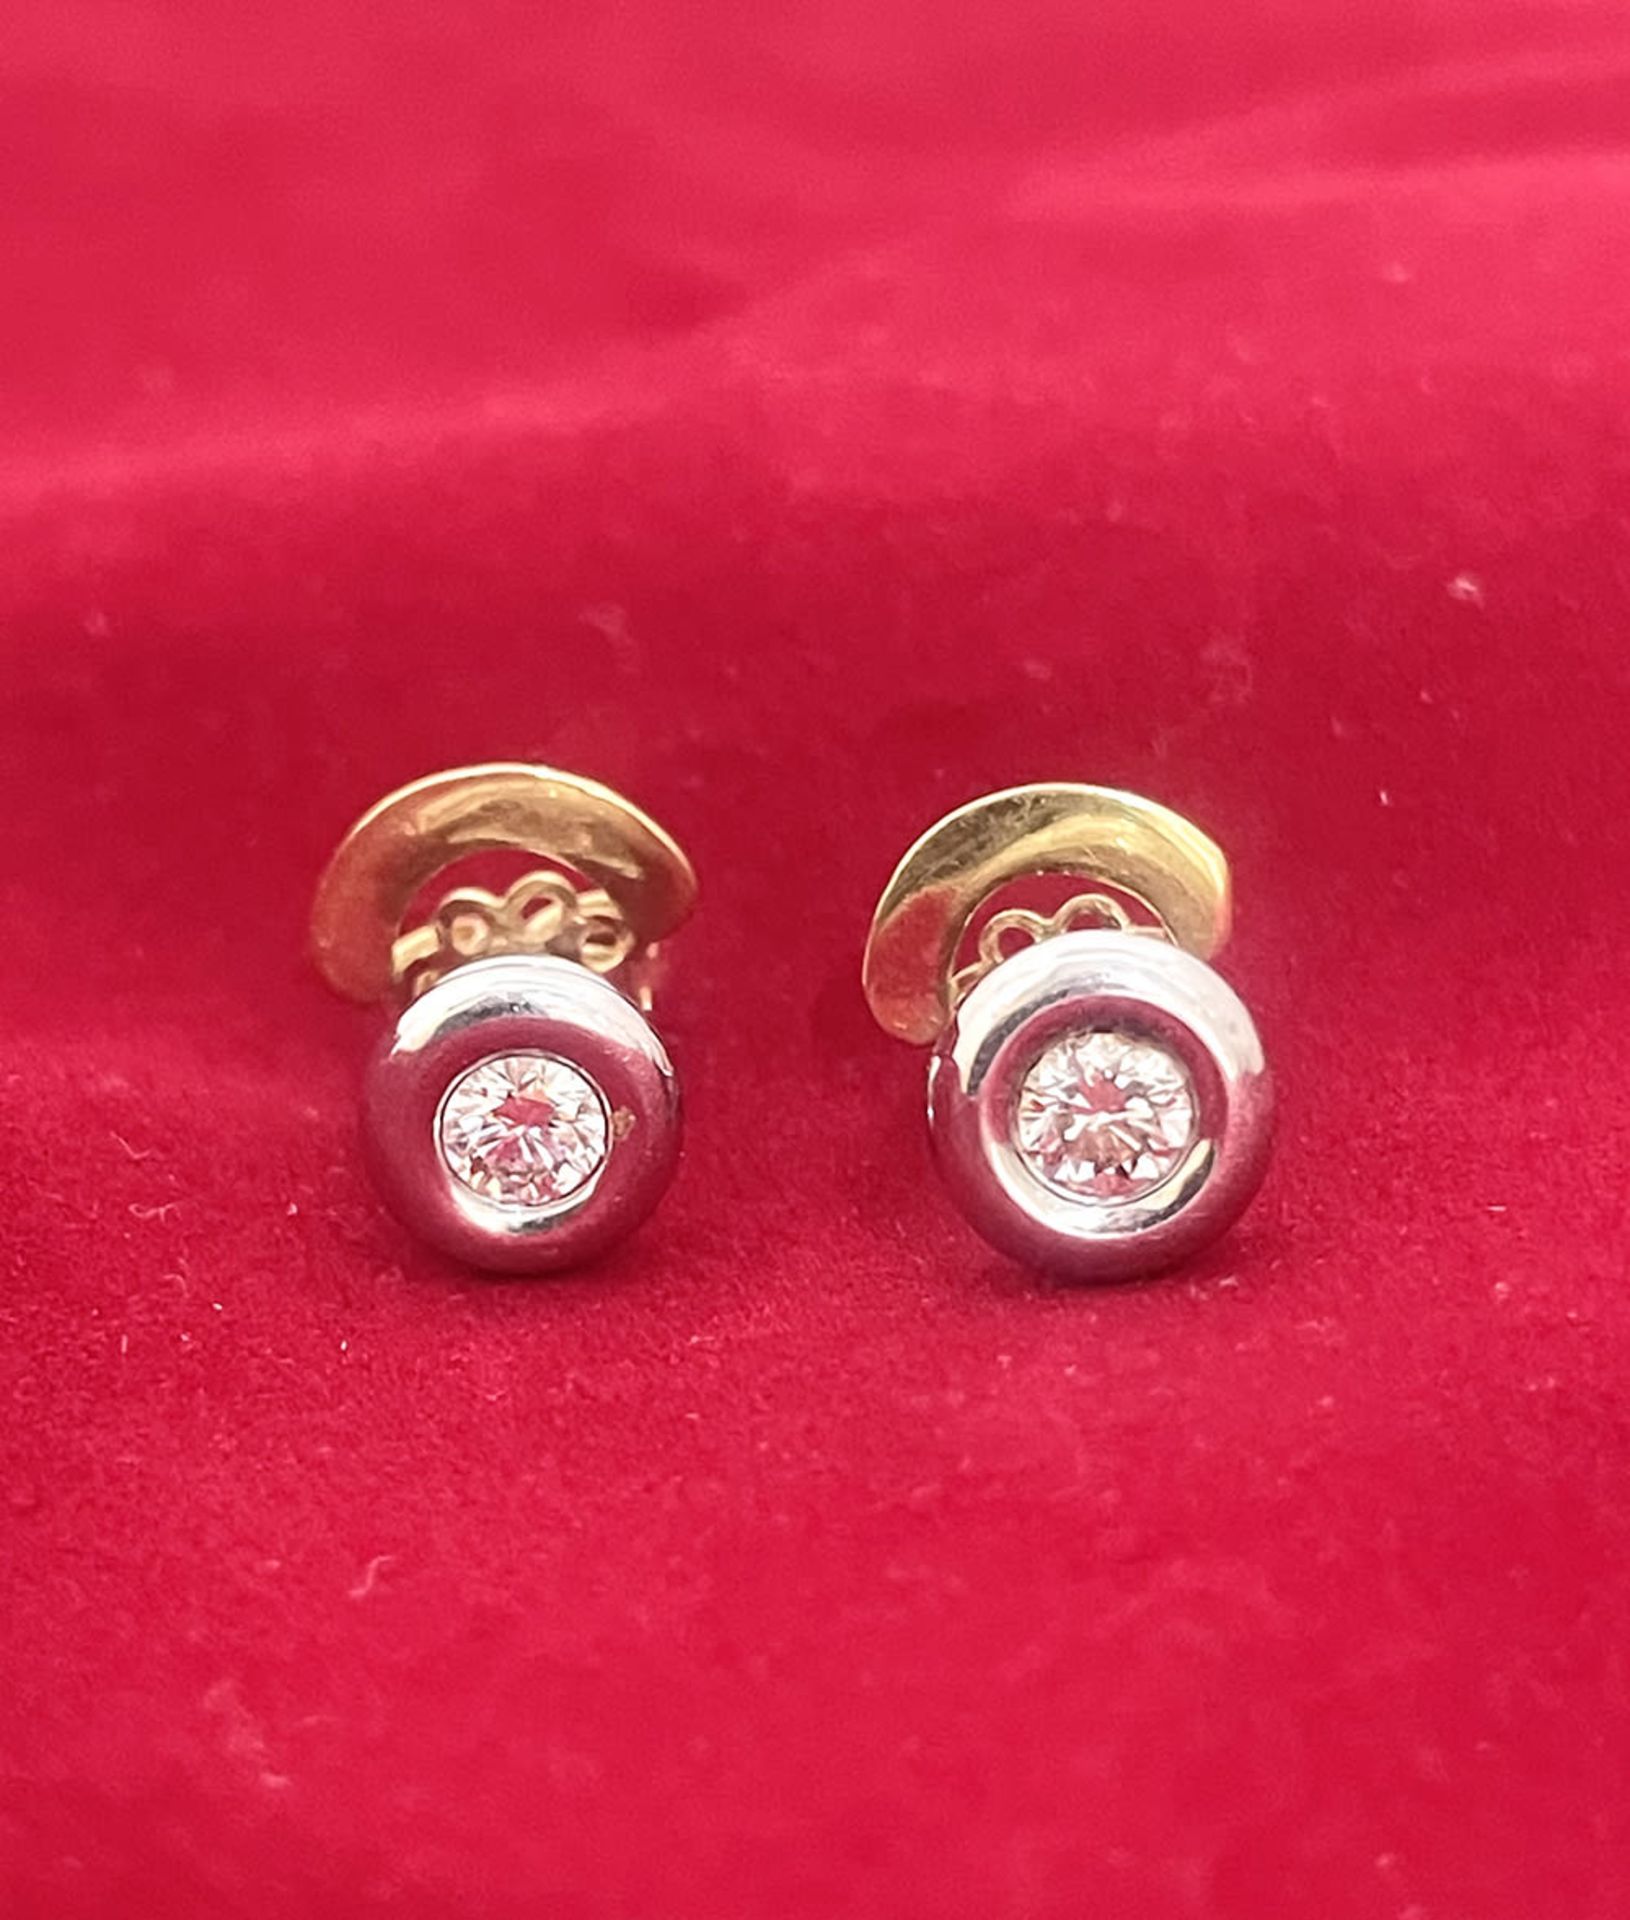 18 kt white gold and diamond stud earrings.